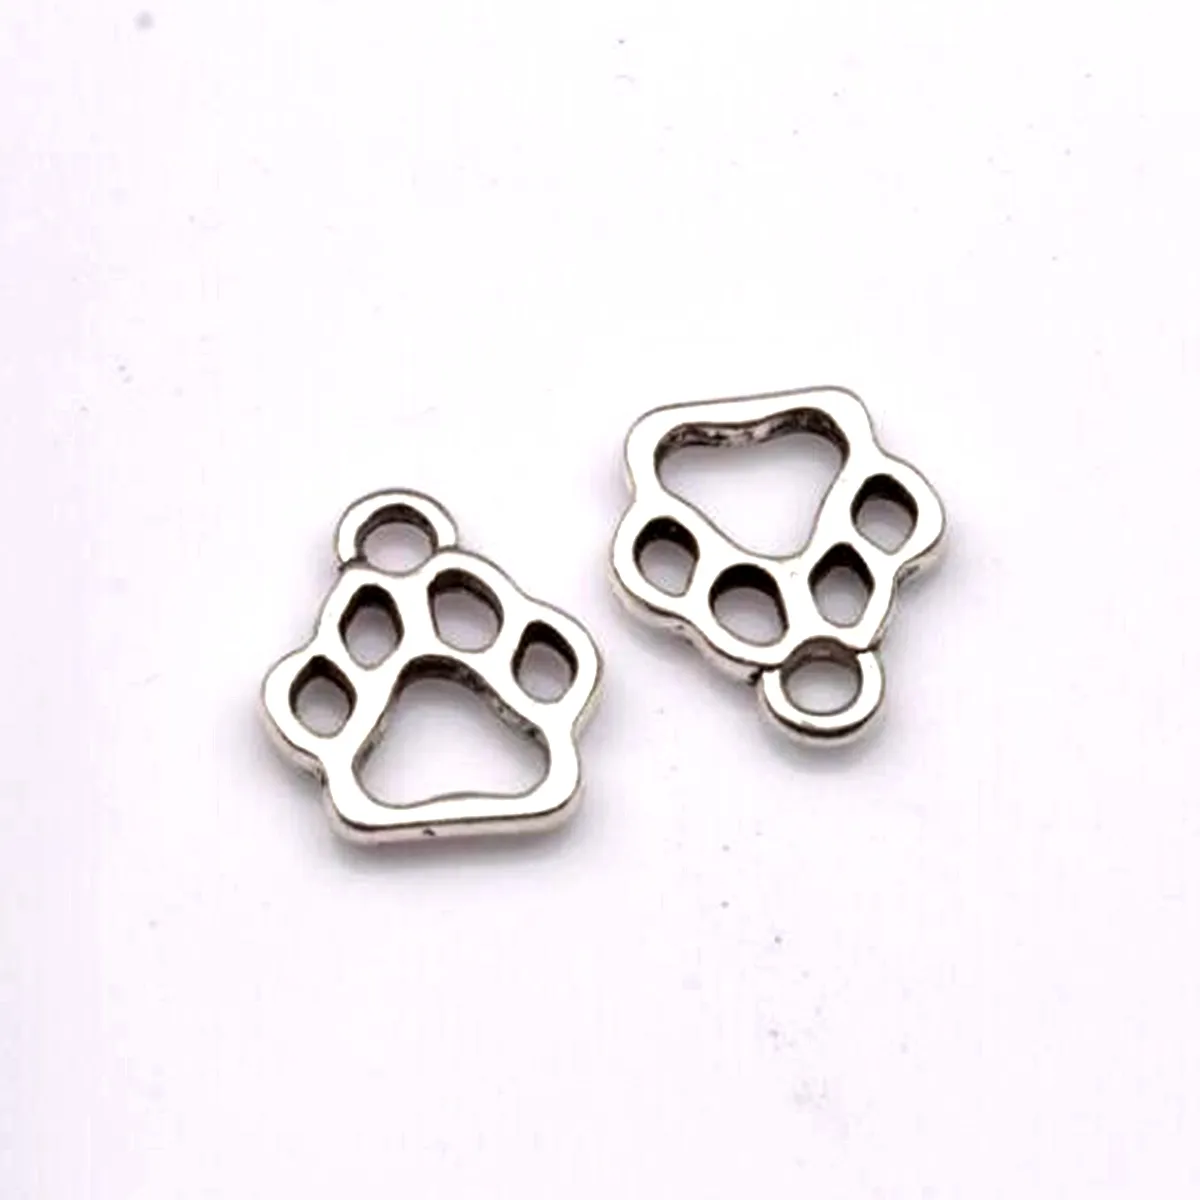 500pcs aleación de perros huecos de pata colgante para joyas que fabrican collar de pulsera accesorios de bricolaje 11x13 mm de plata antigua